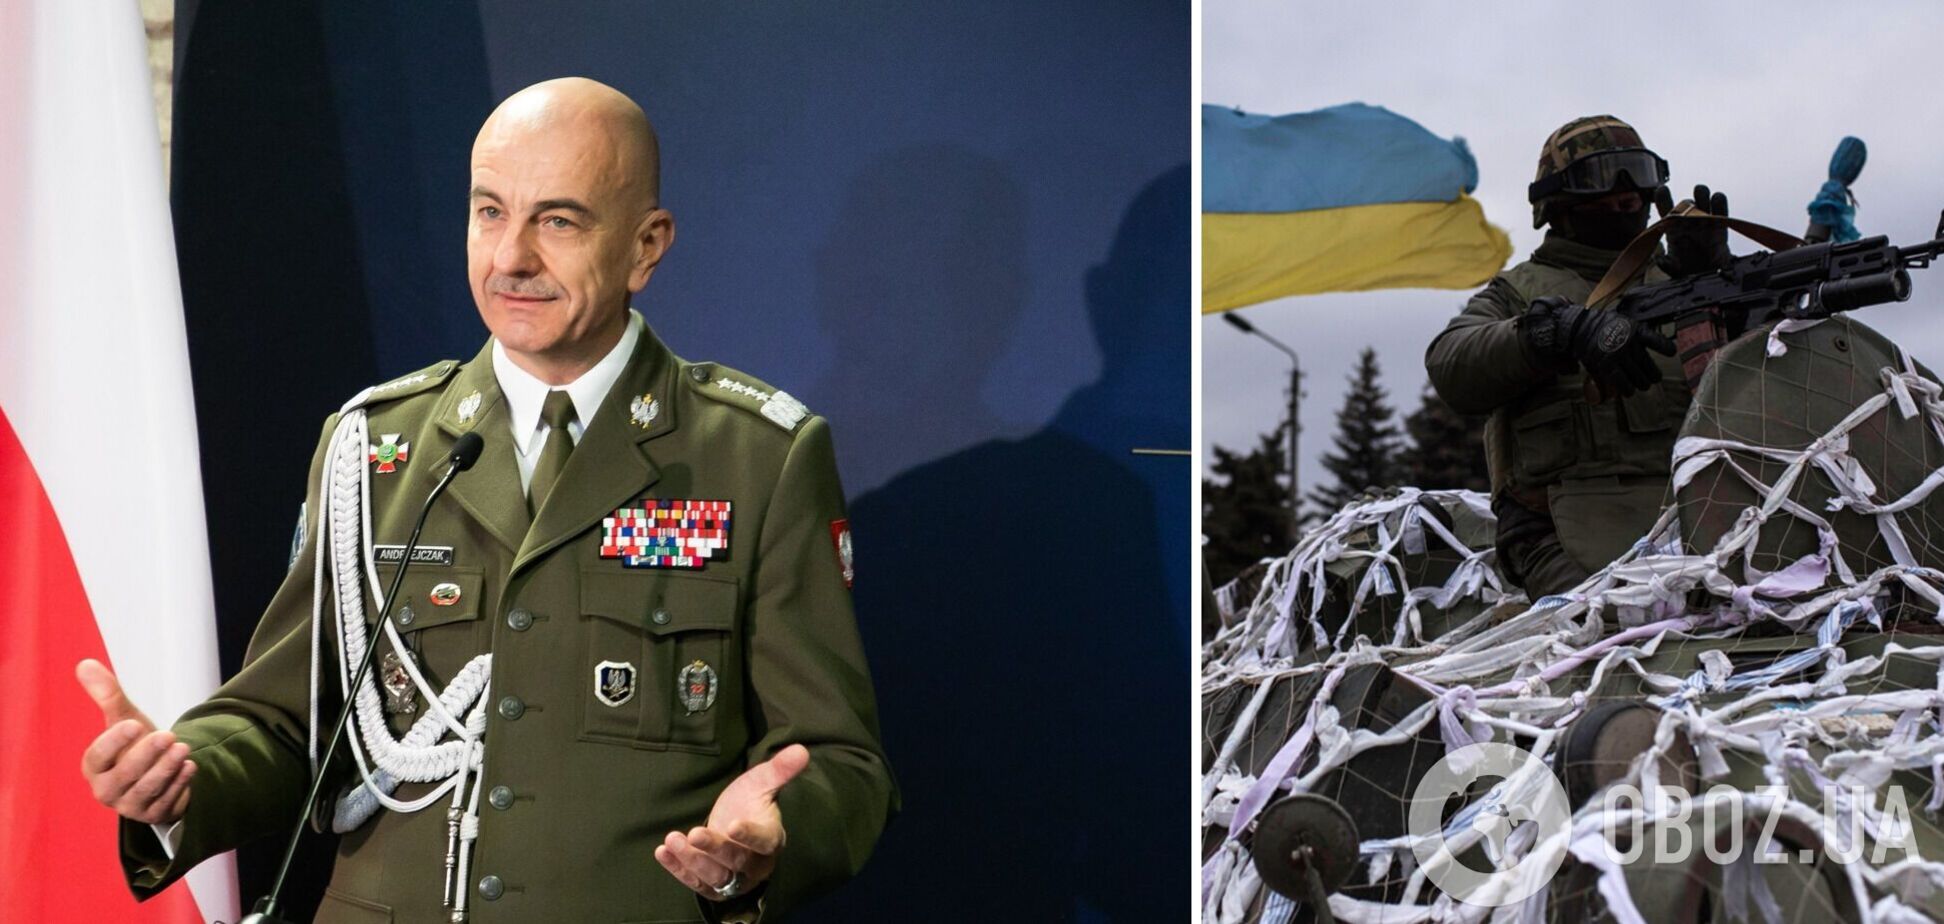 Україна має перемогти, це наша місія, і крапка, – начальник Генштабу військ Польщі 